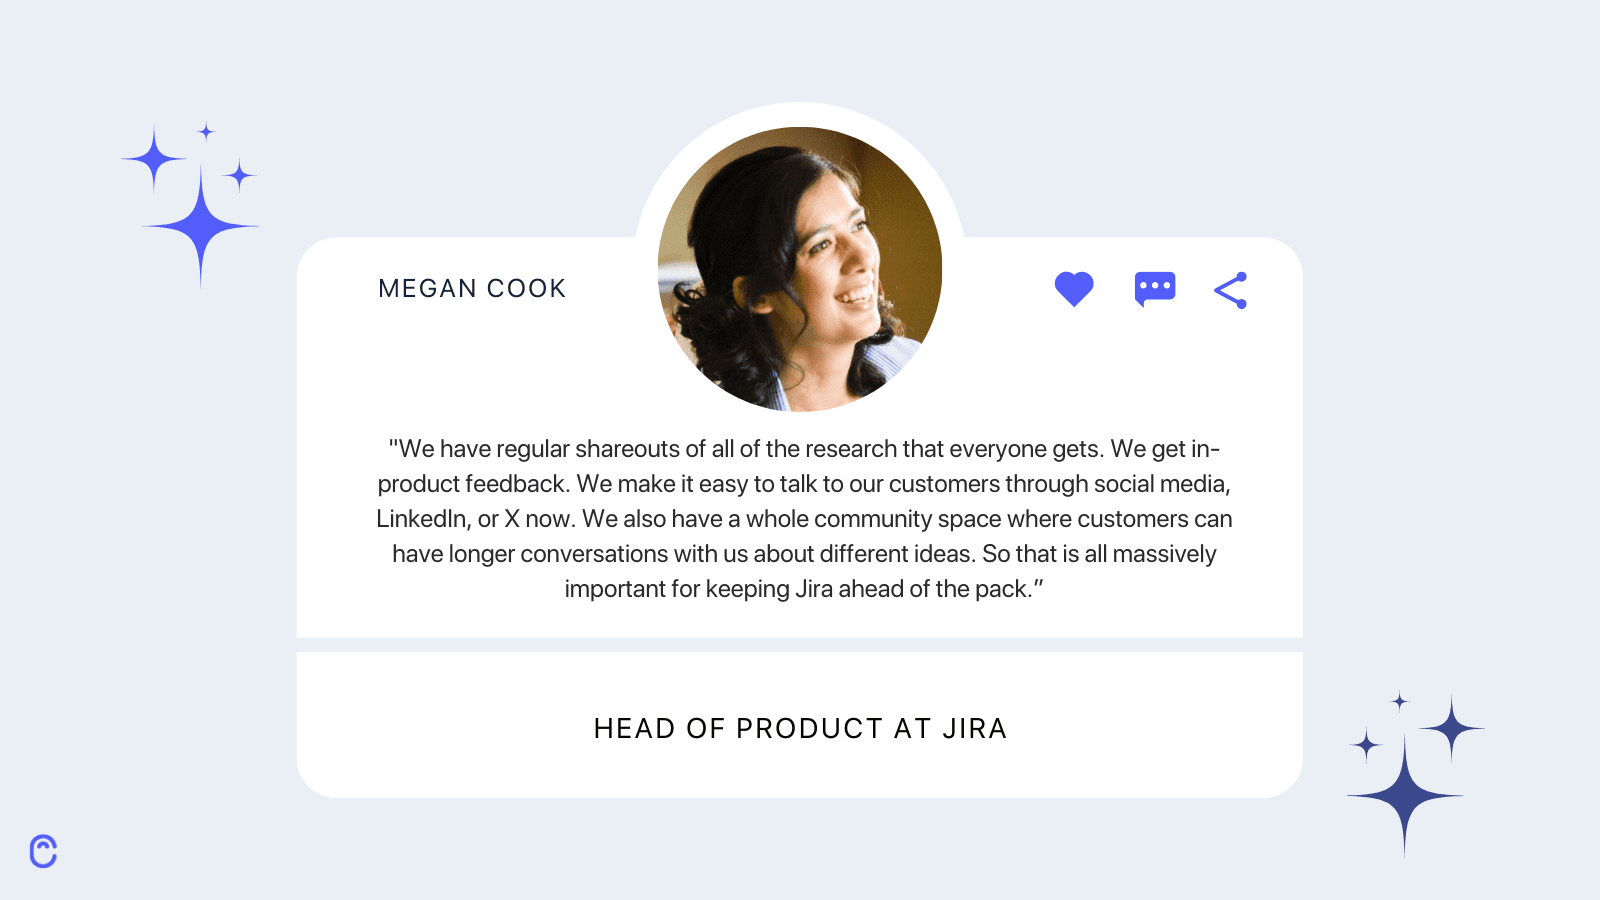 Megan Cook, head of product at Jira